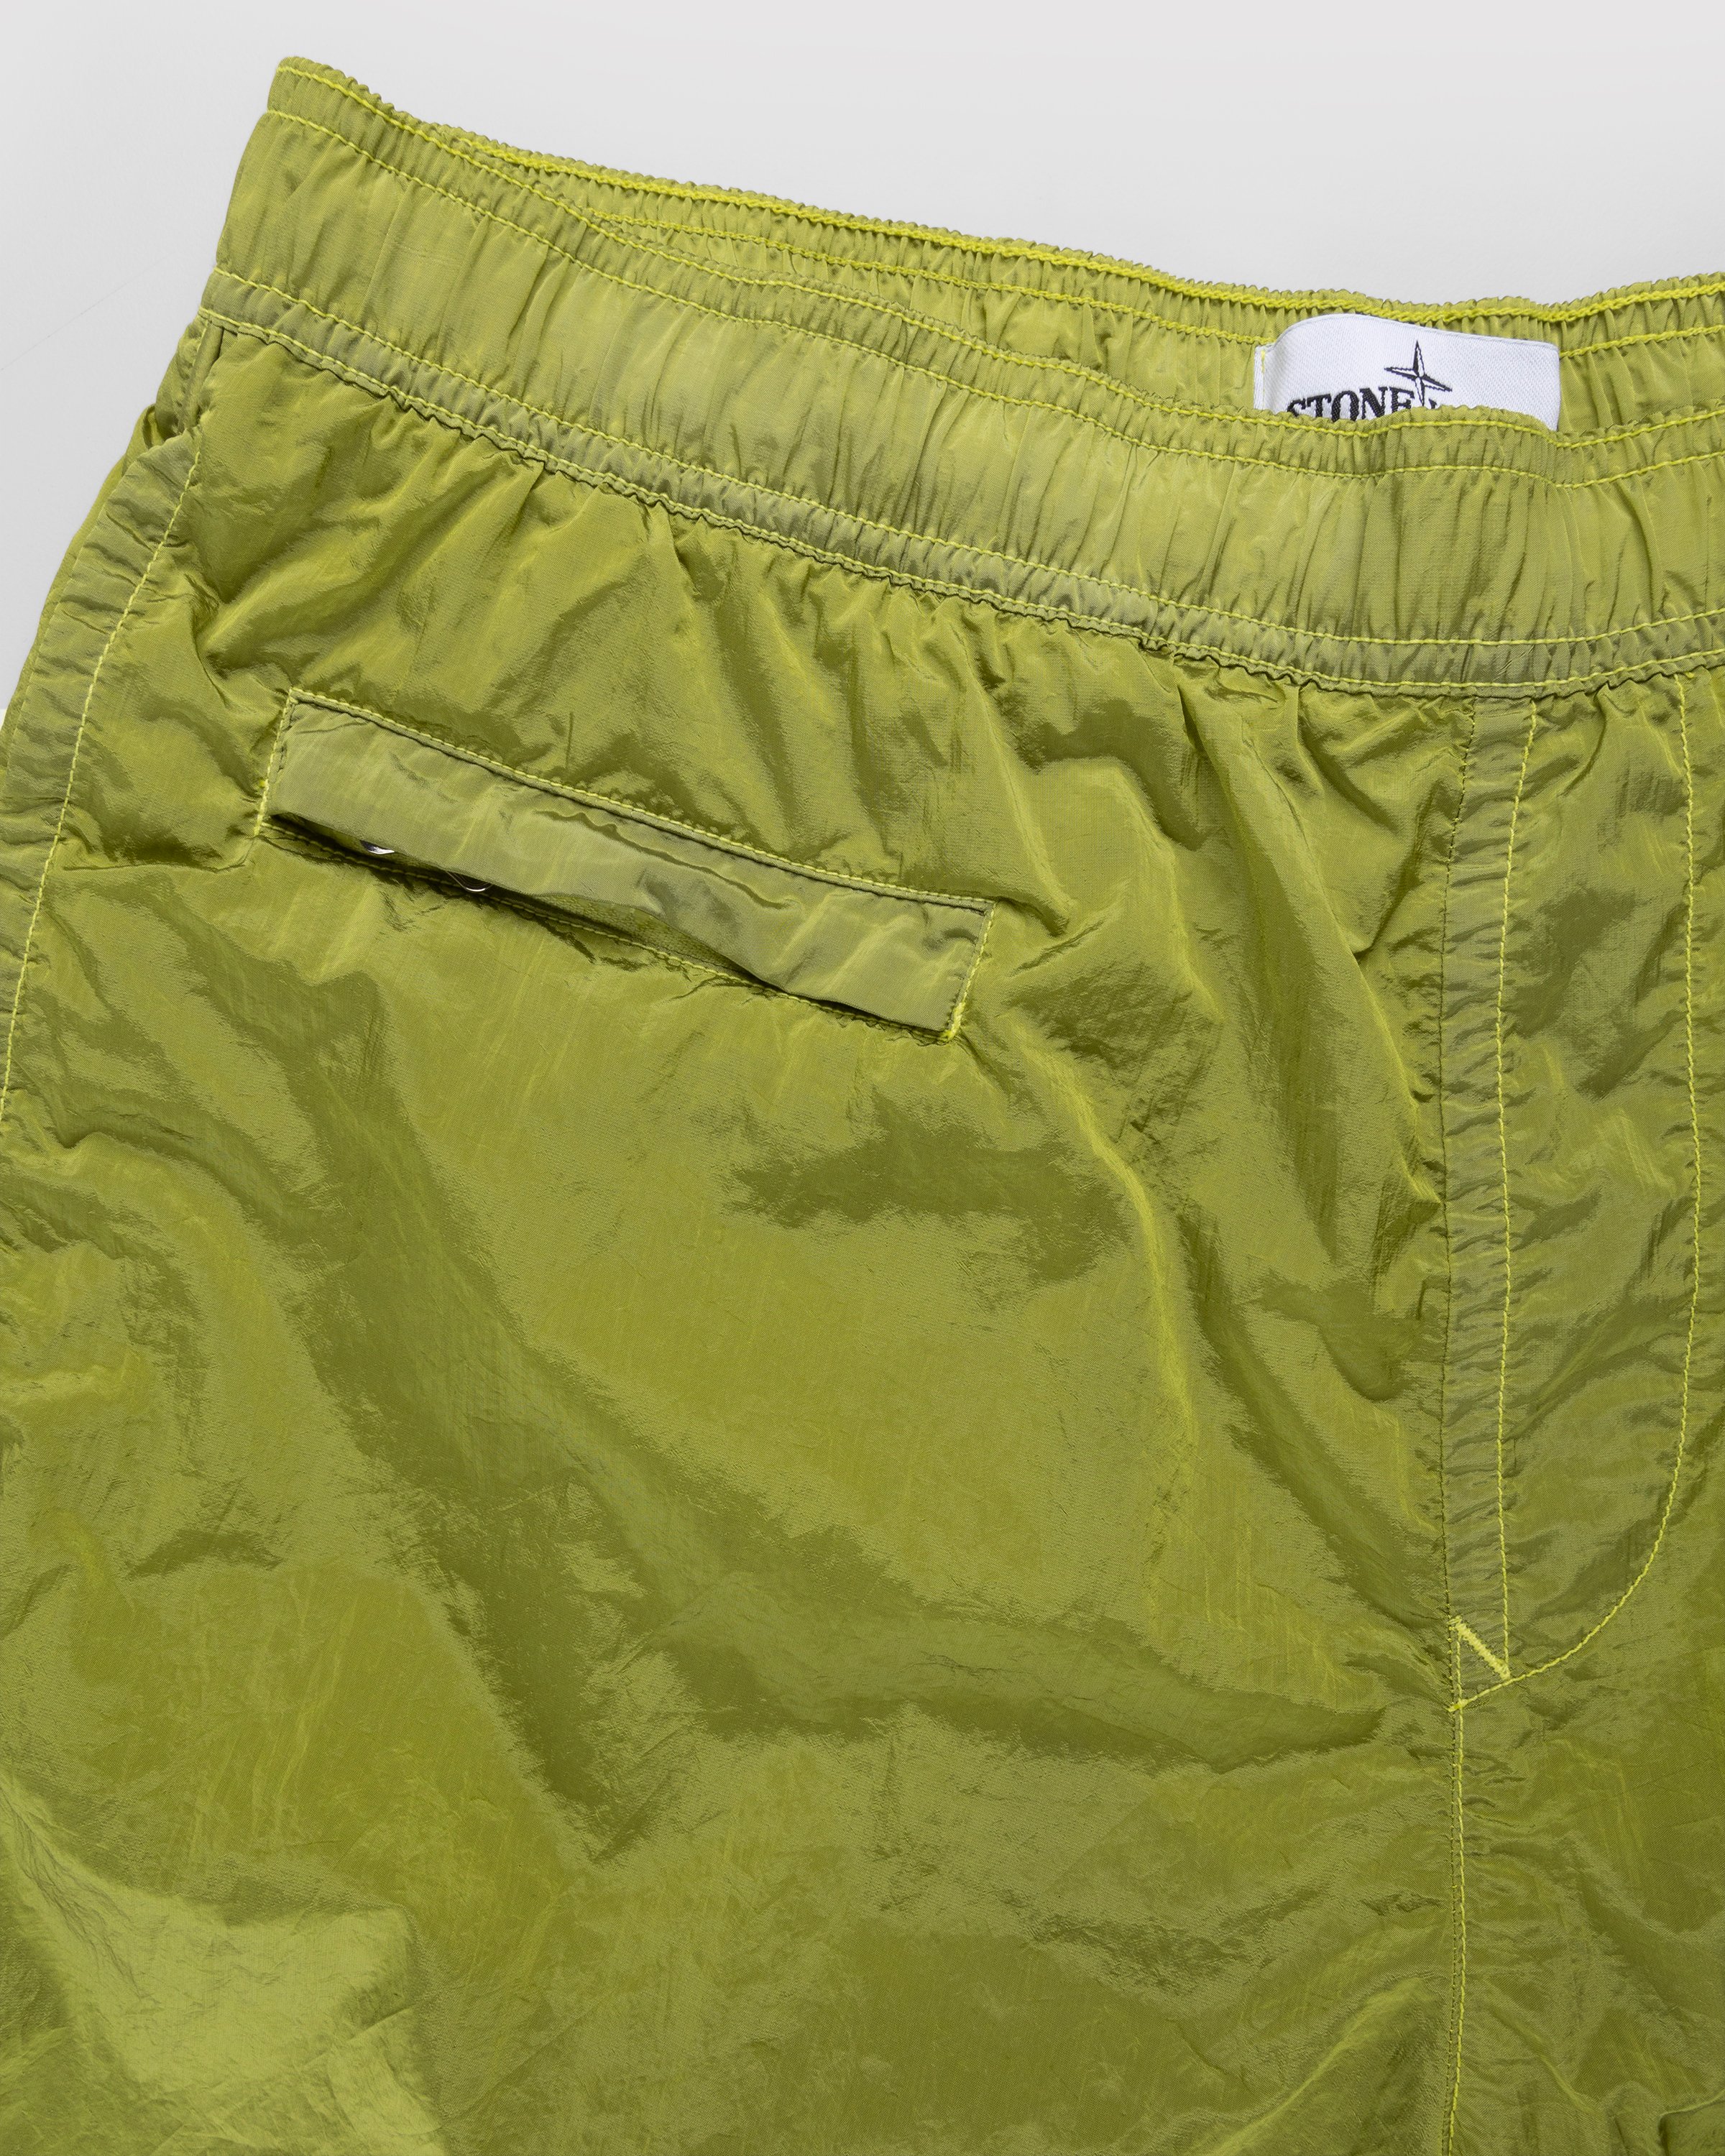 Stone Island - B0243 Nylon Metal Swim Shorts Lemon - Clothing - Yellow - Image 6